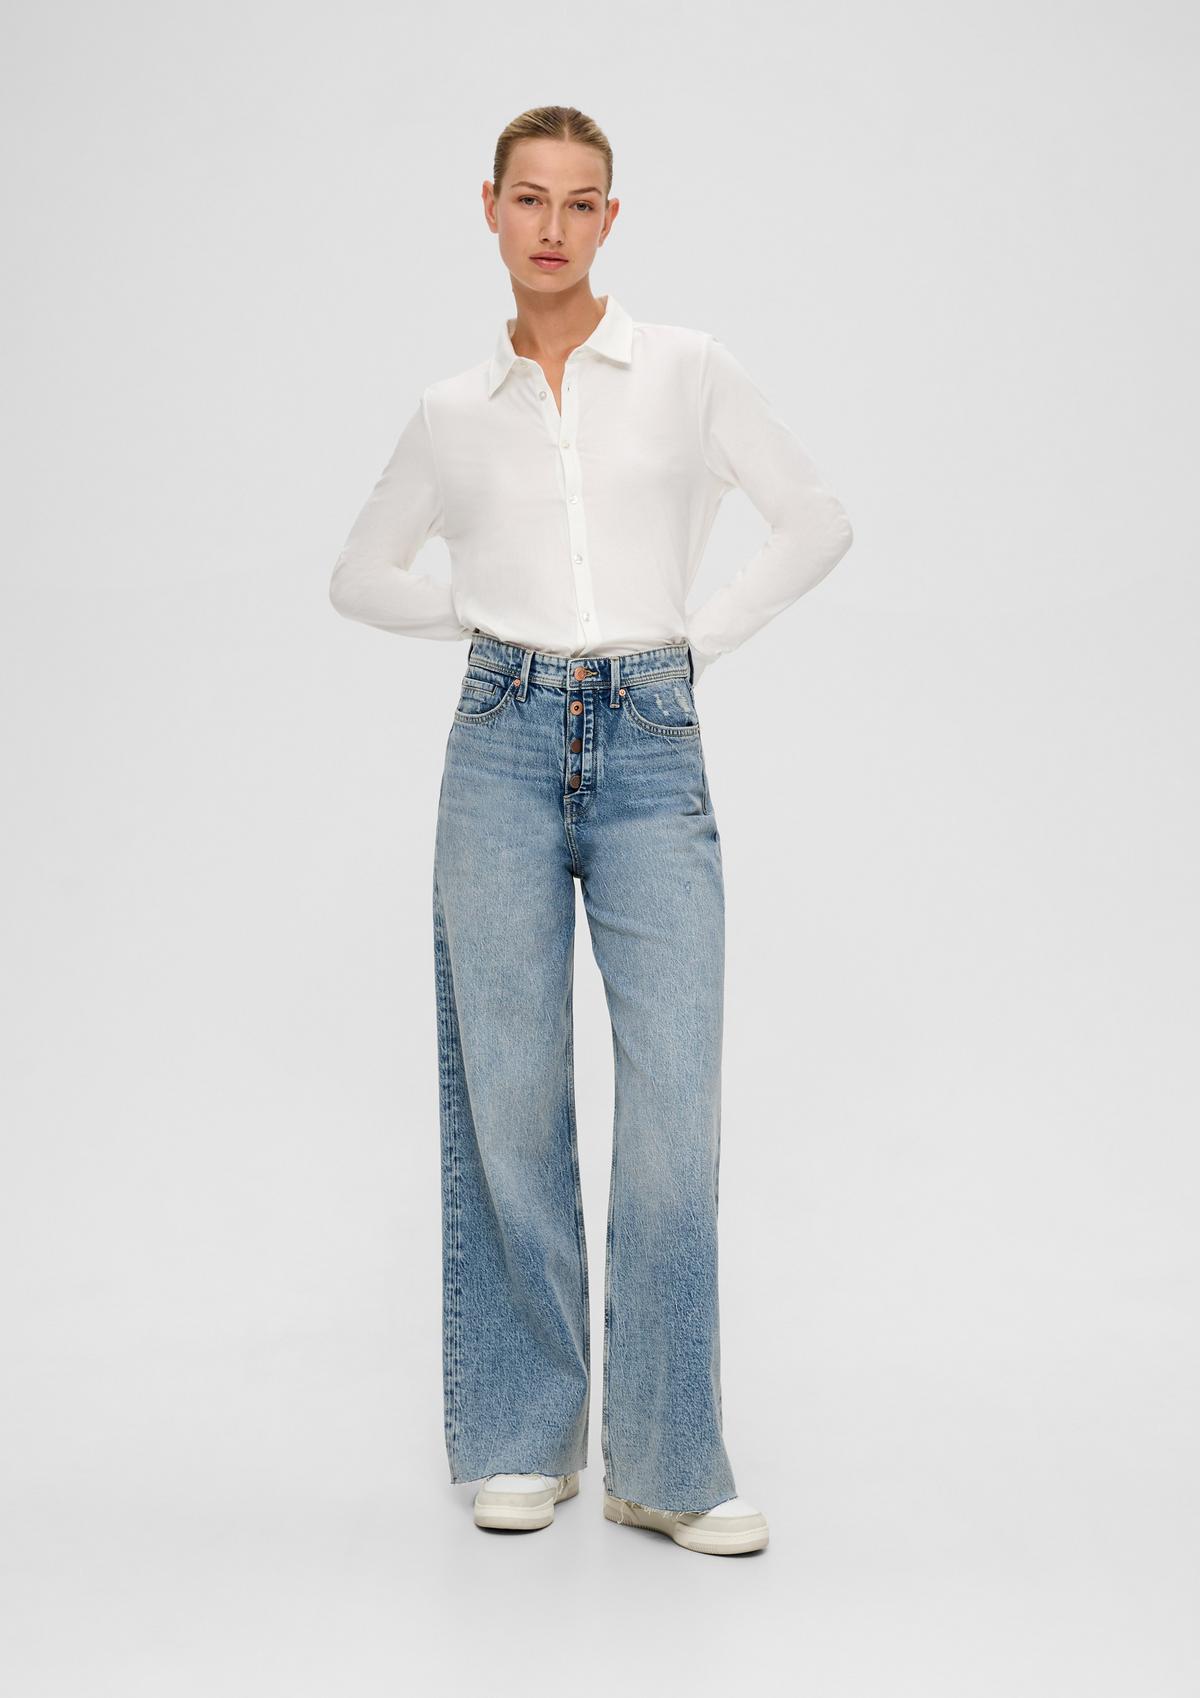 Regular: Marlene jeans with pressed pleats